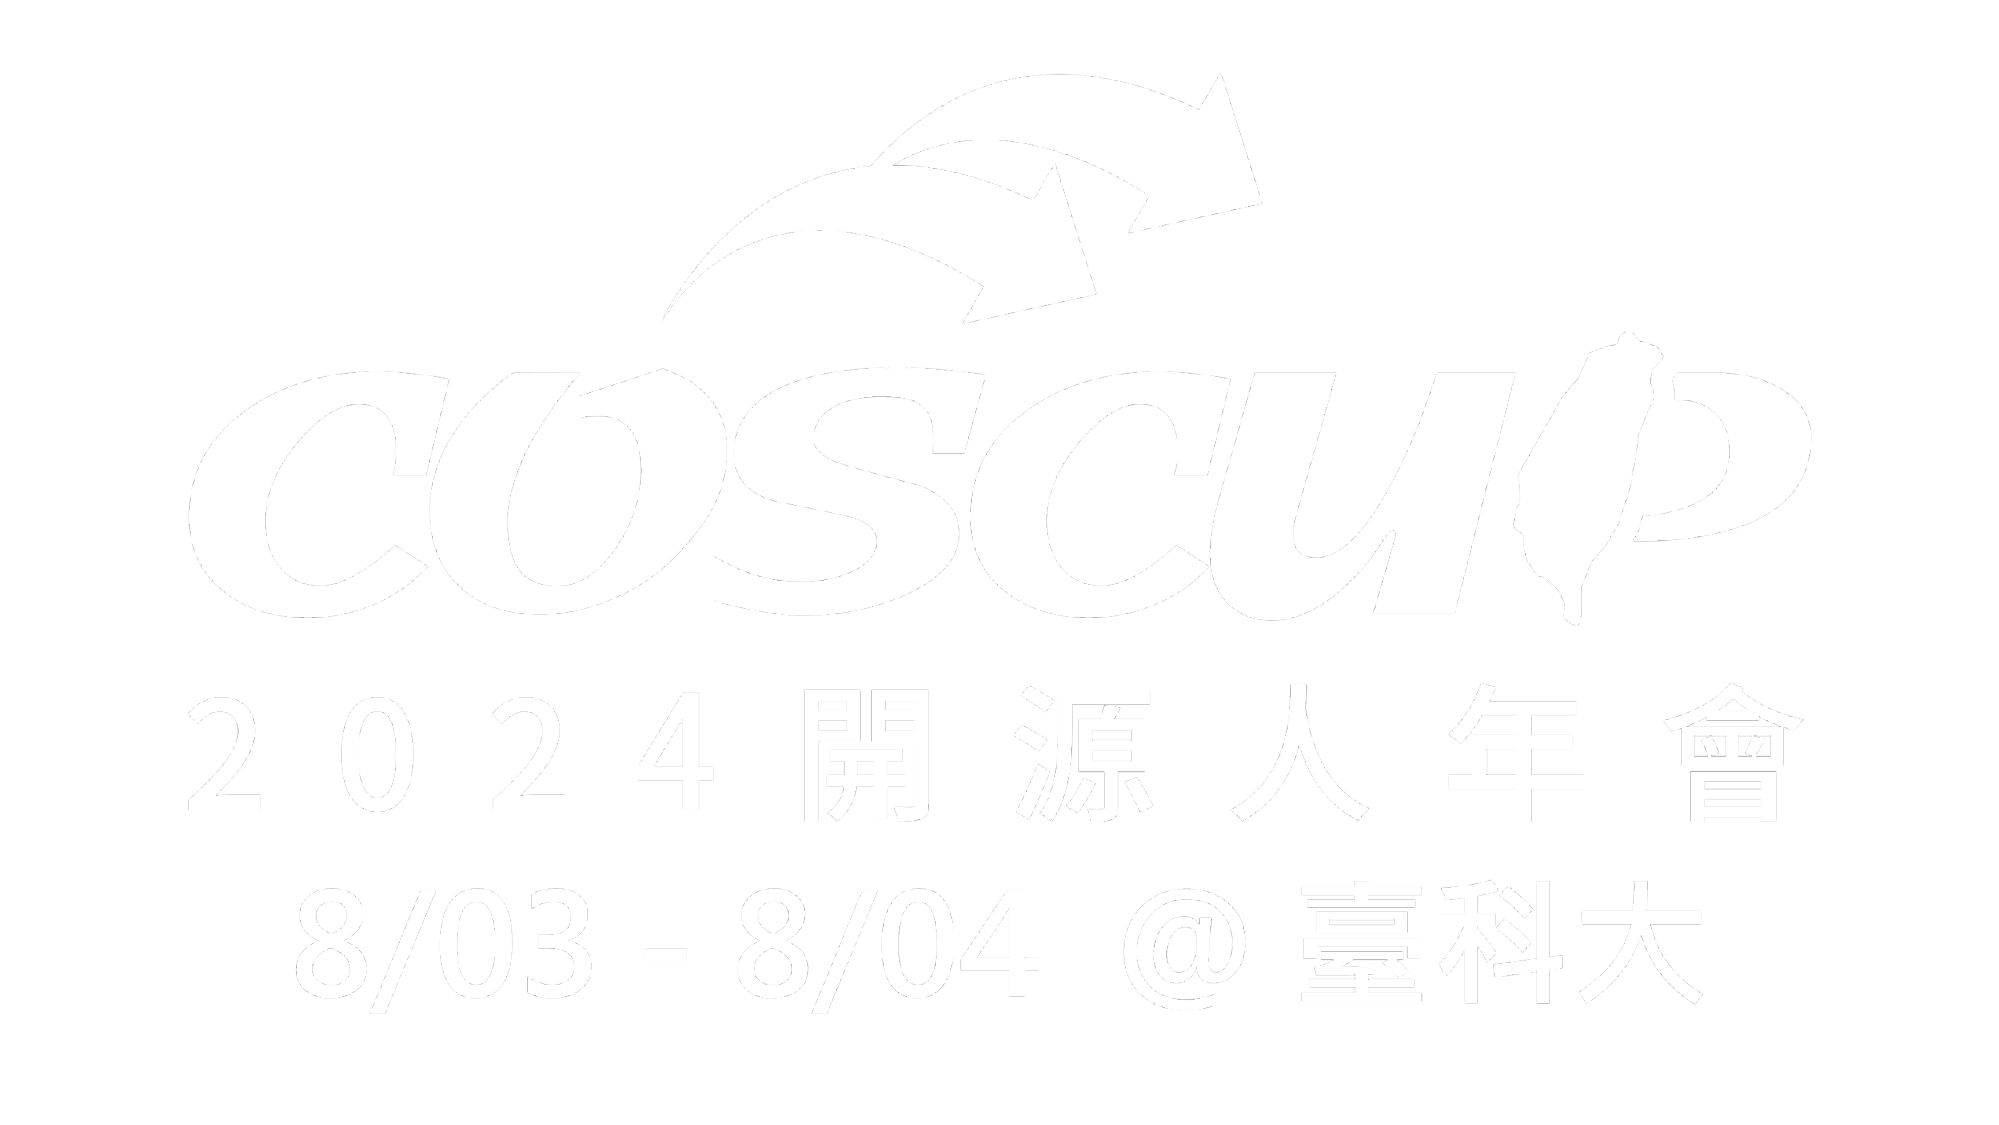 COSCUP Taiwan 2024 Sponsorship Program